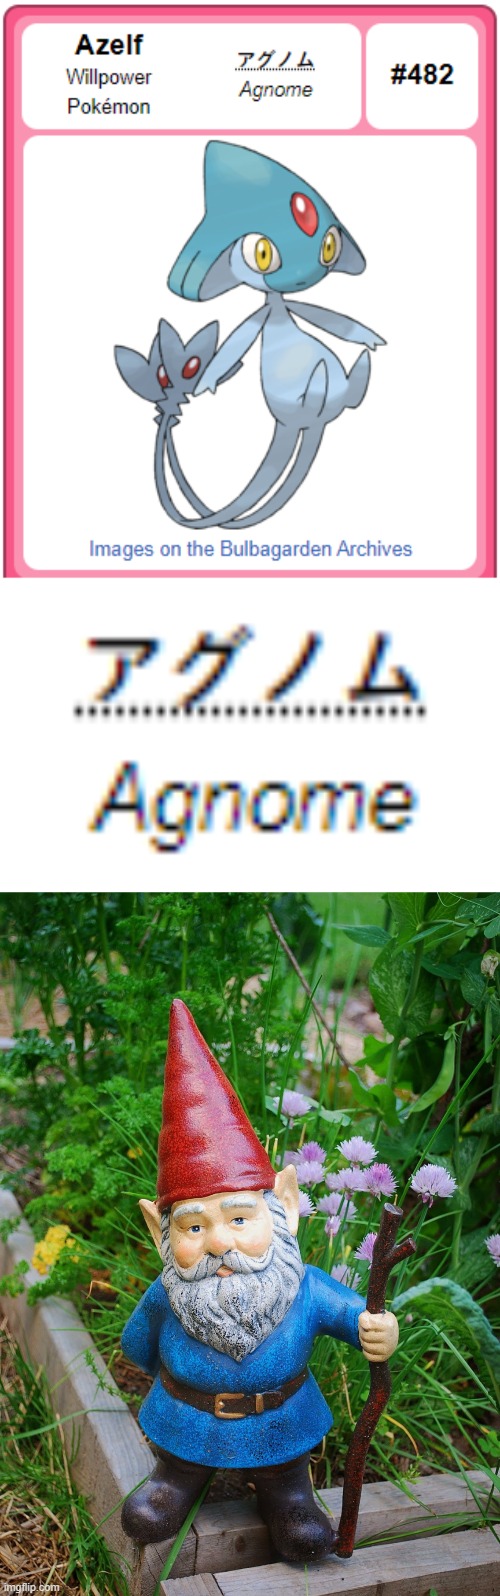 Zelf=Gnome?! | image tagged in gnome,azelf,pokemon,japanese,memes,translation | made w/ Imgflip meme maker